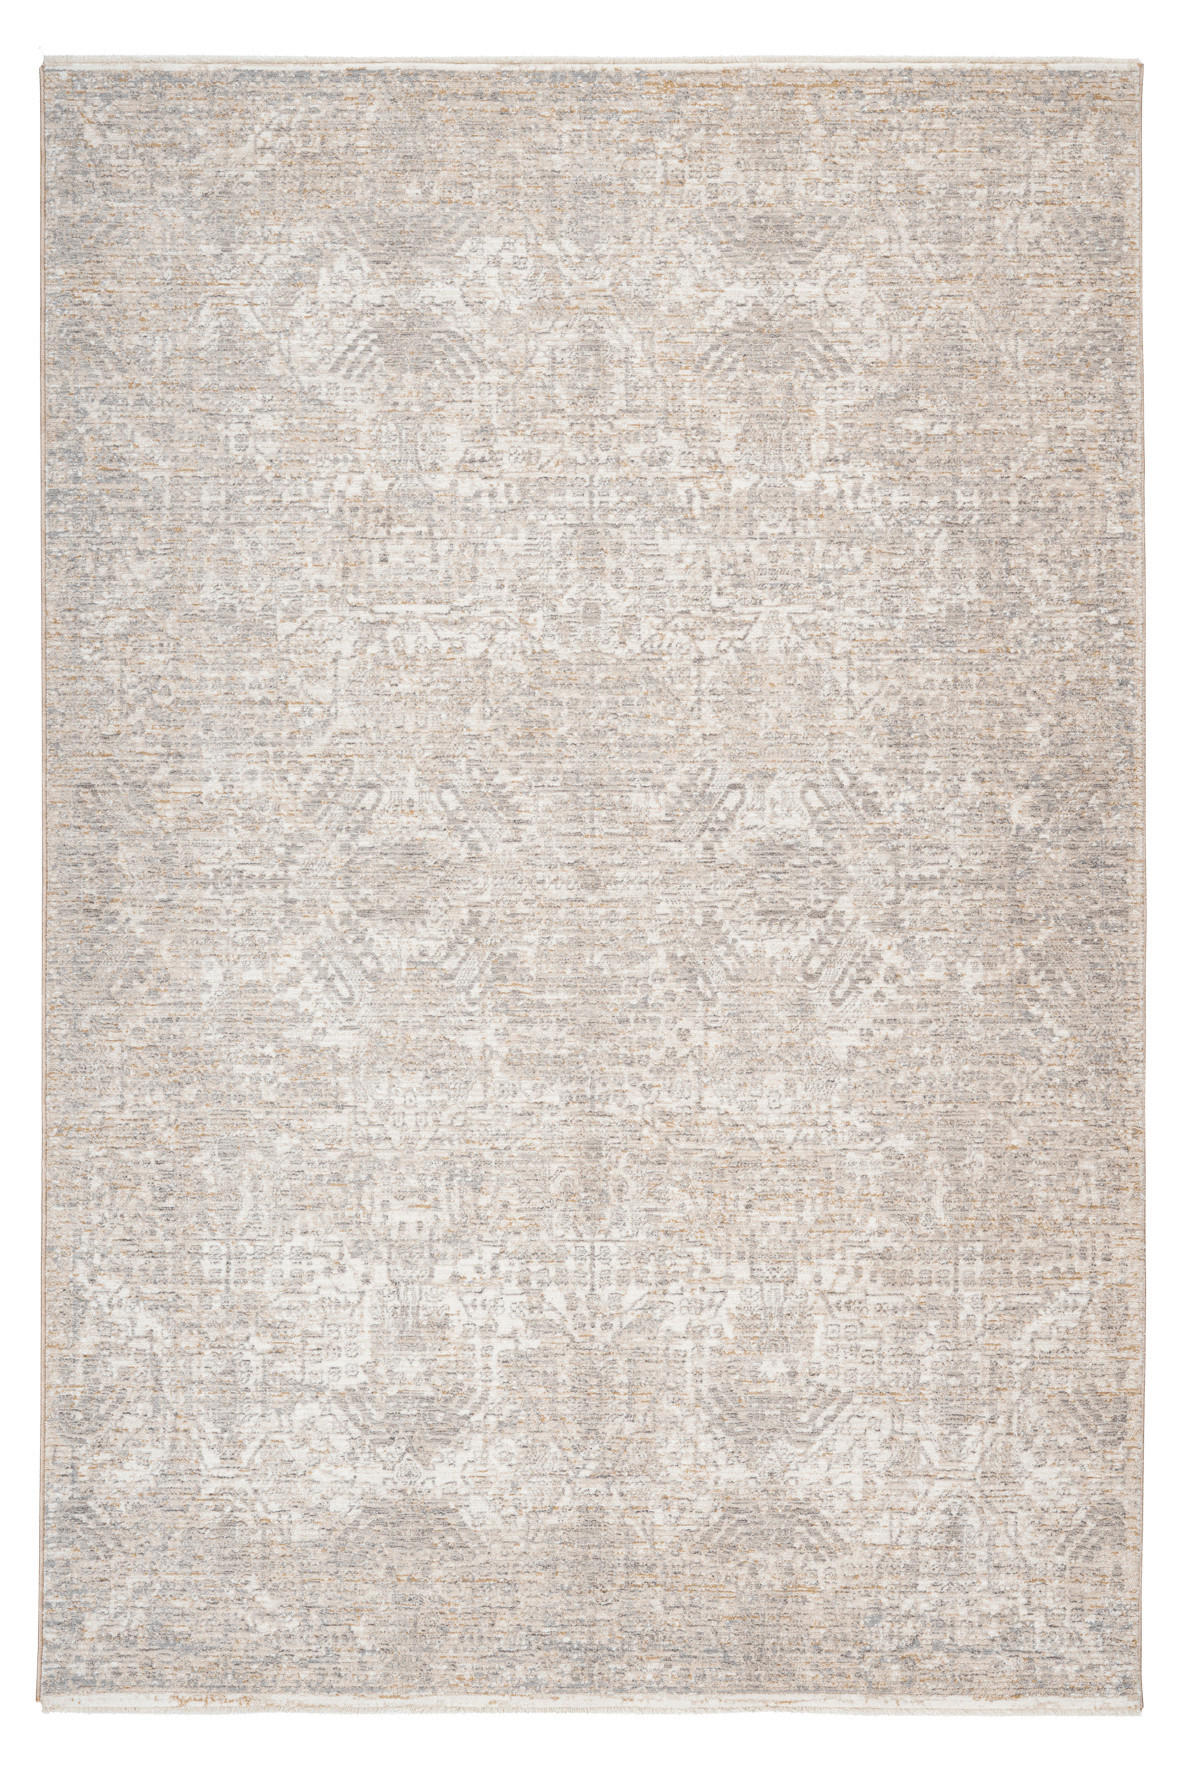 WEBTEPPICH 80/150 cm My Manaos  - Taupe, KONVENTIONELL, Textil (80/150cm) - Novel